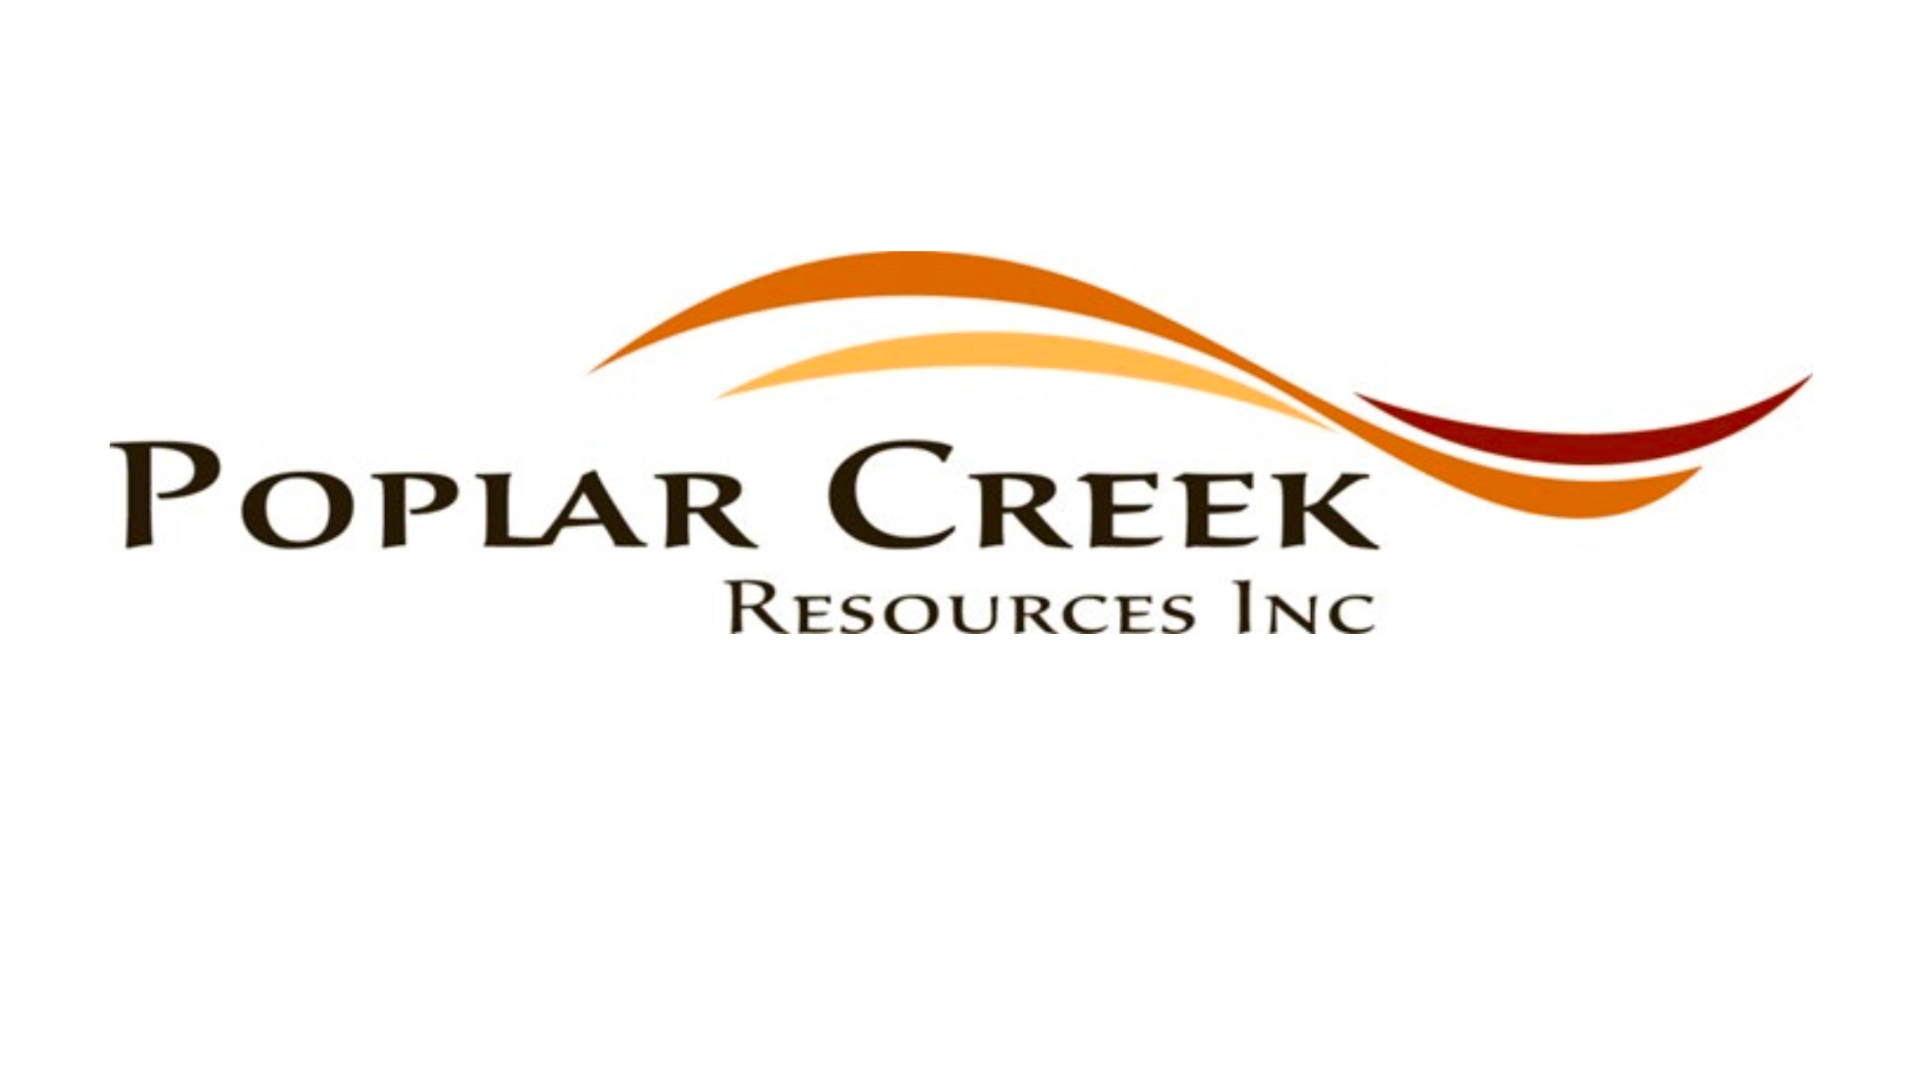 Poplar Creek Resources Inc